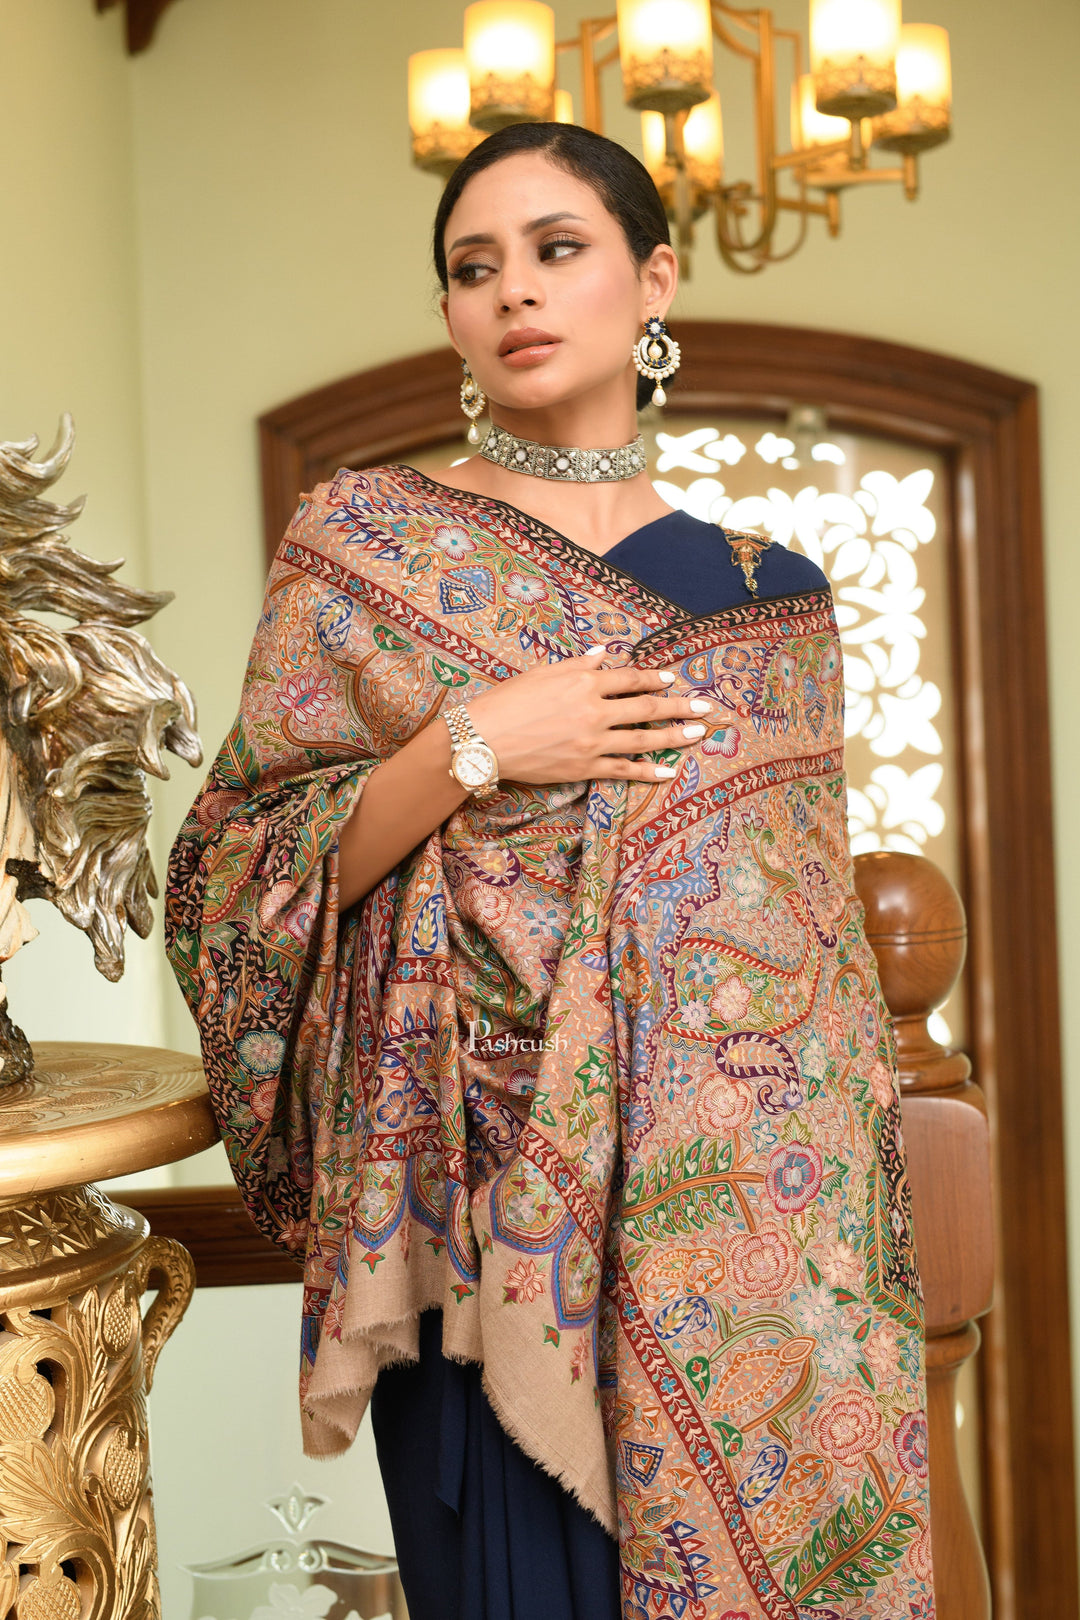 Pashtush Womens Pure Pashmina Shawl, Hand Painted And Embroidered